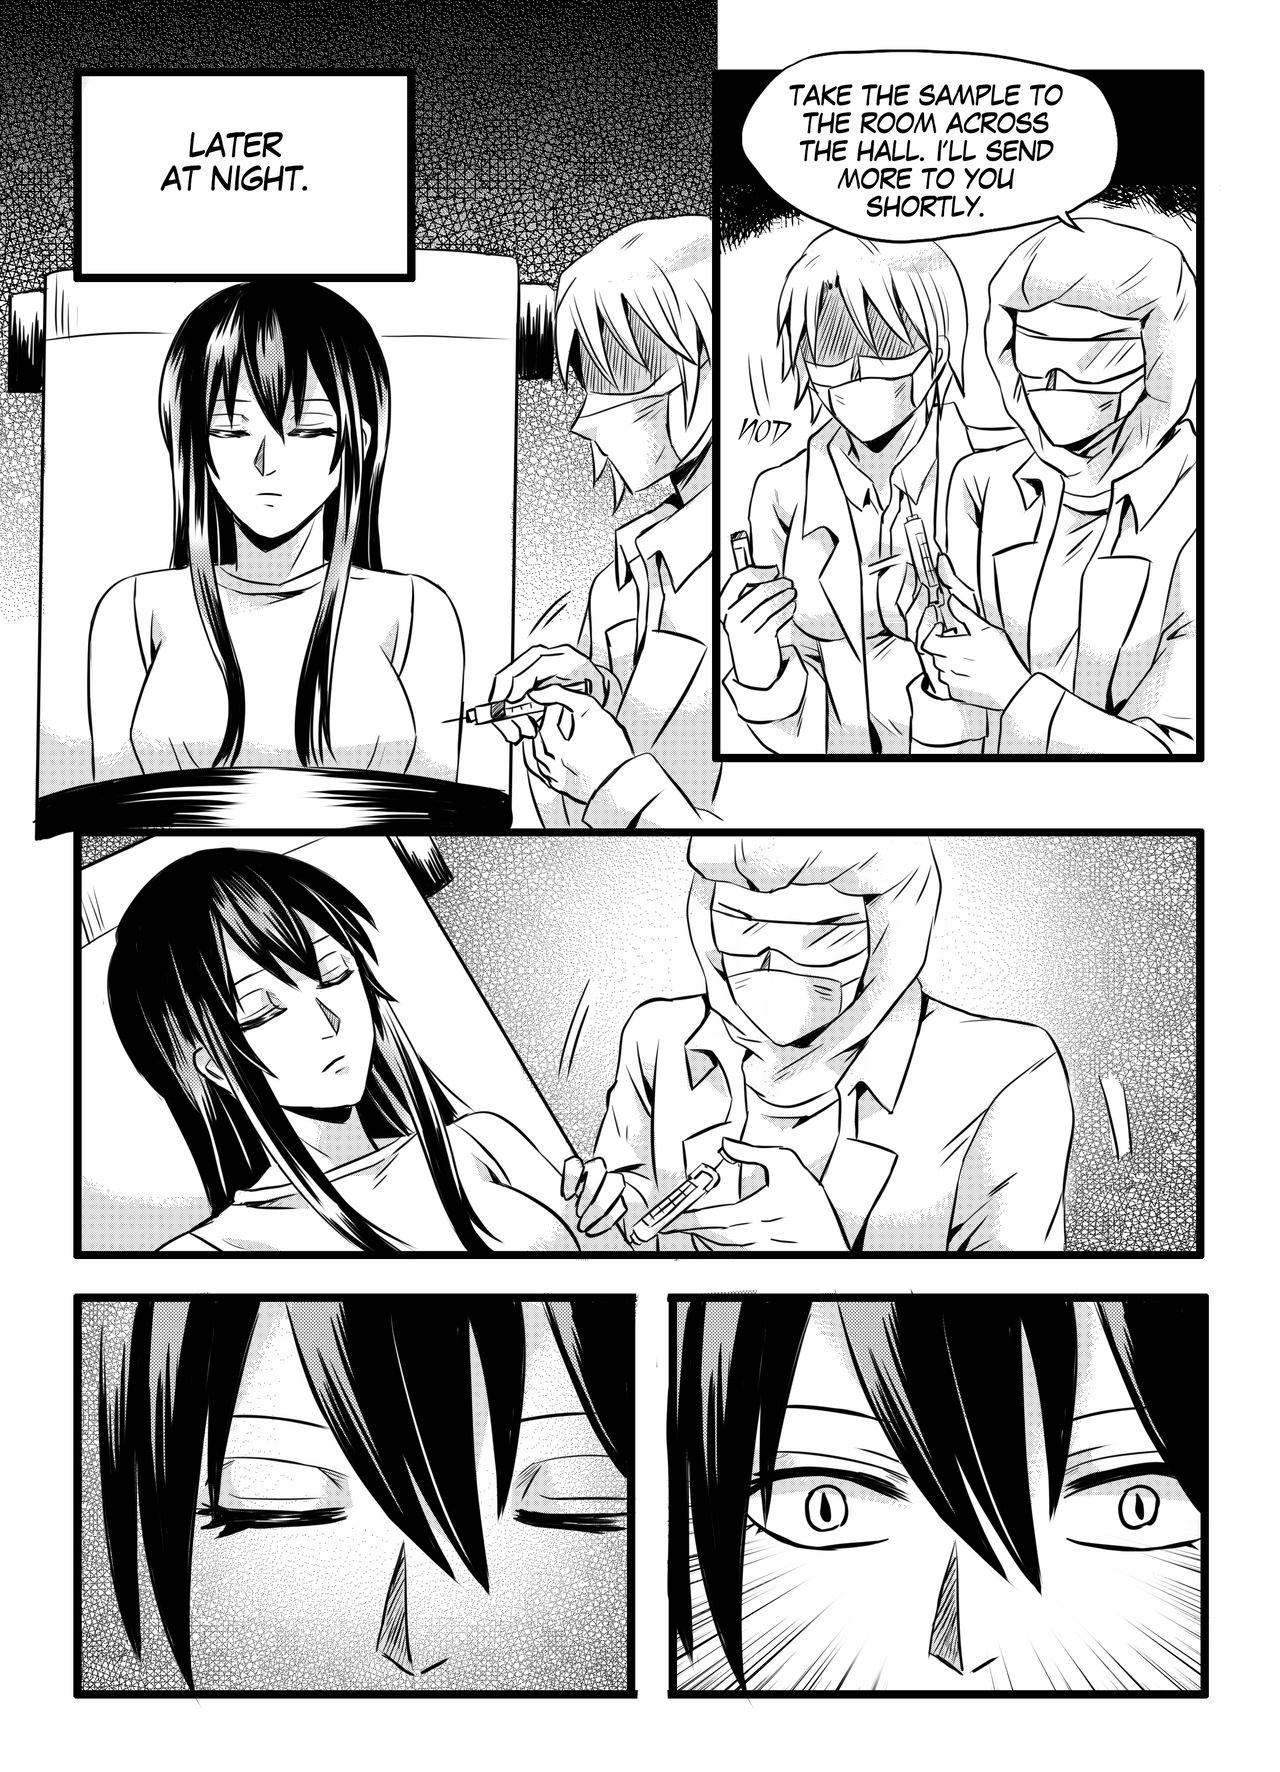 High School Of the Dead Manga Commission - Page 1 by Arashi-Matoi on  DeviantArt